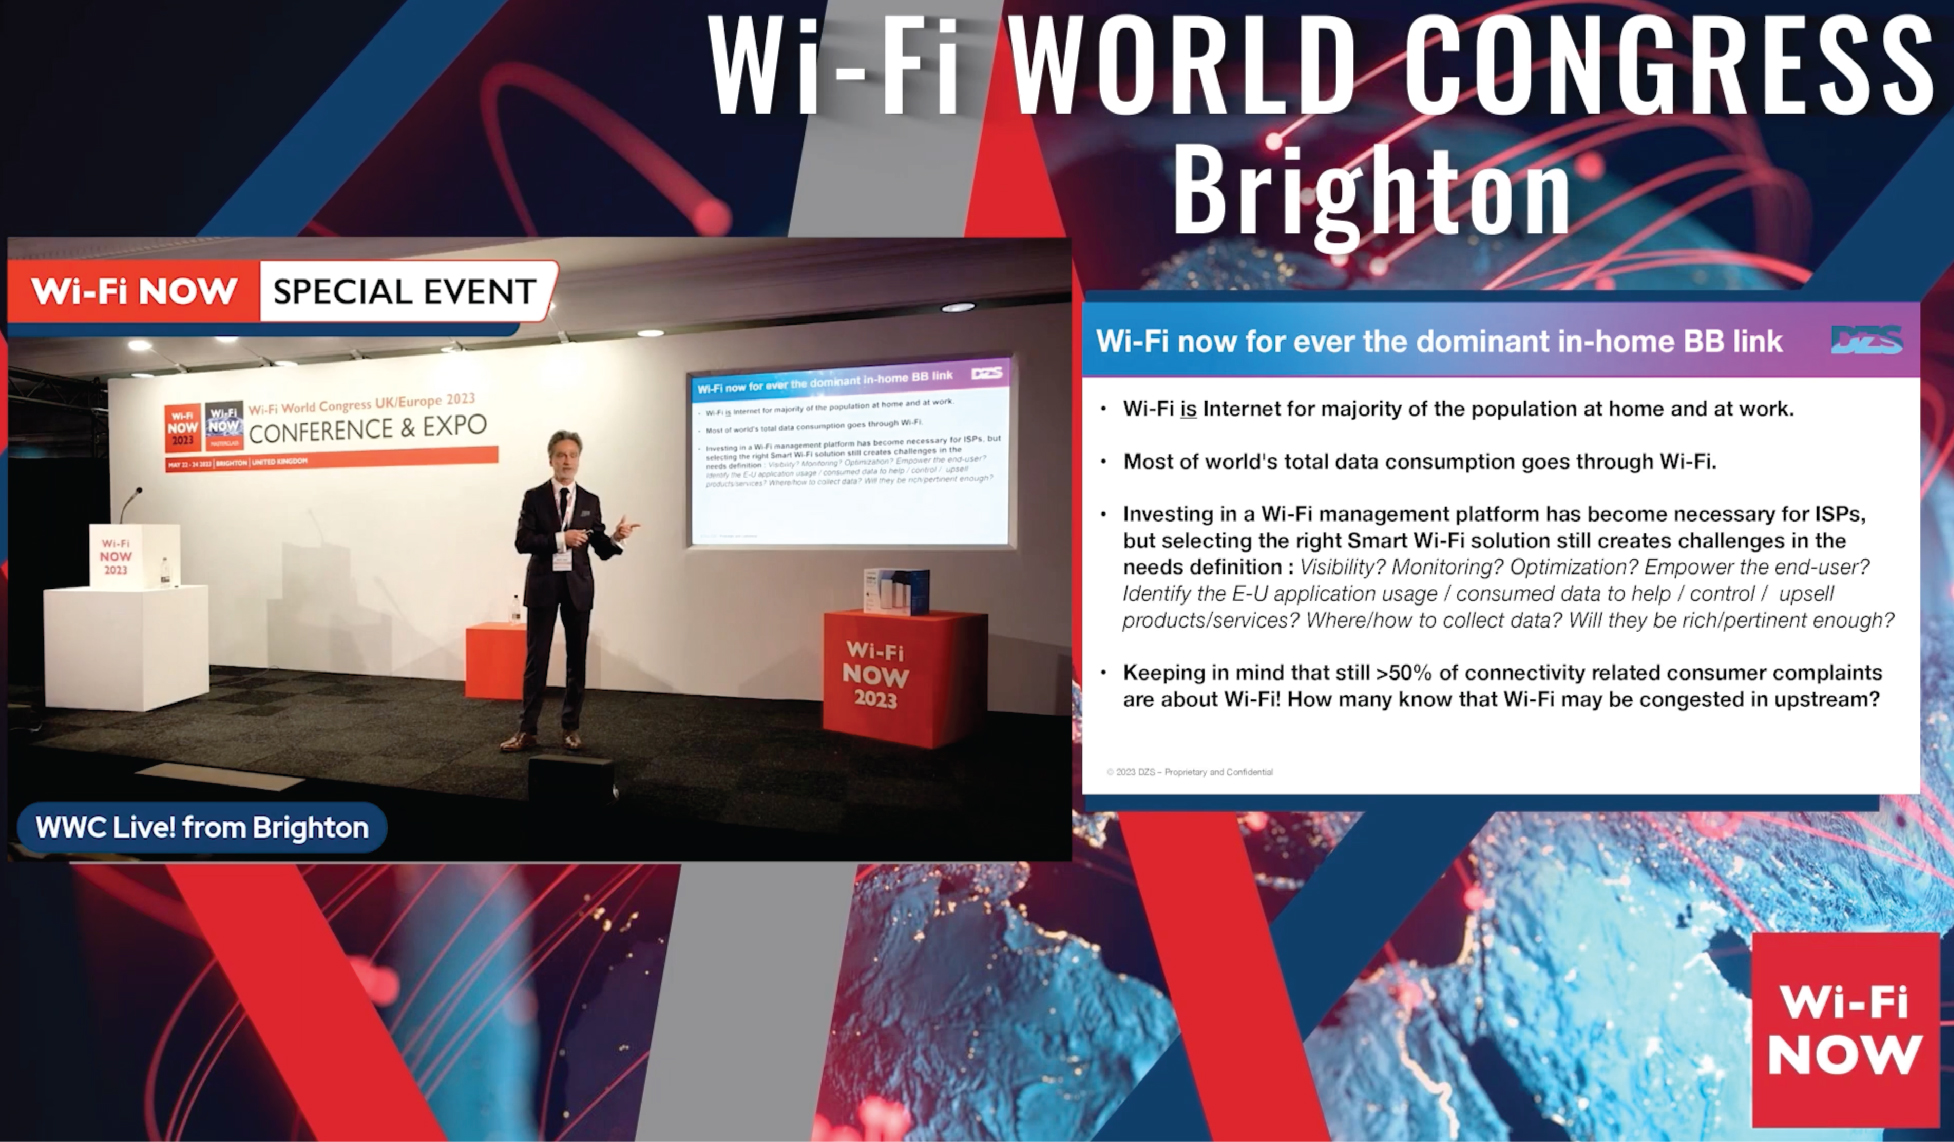 DZS's Jerome Anastase presents at WiFi World Congress in Brighton, UK.